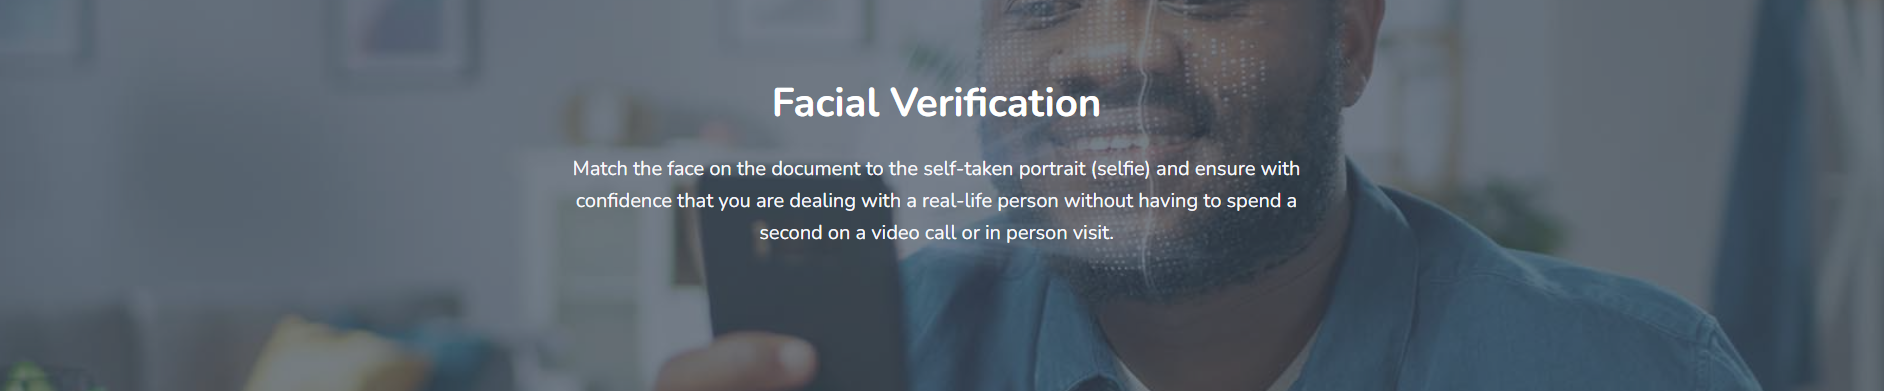 Facial Verification